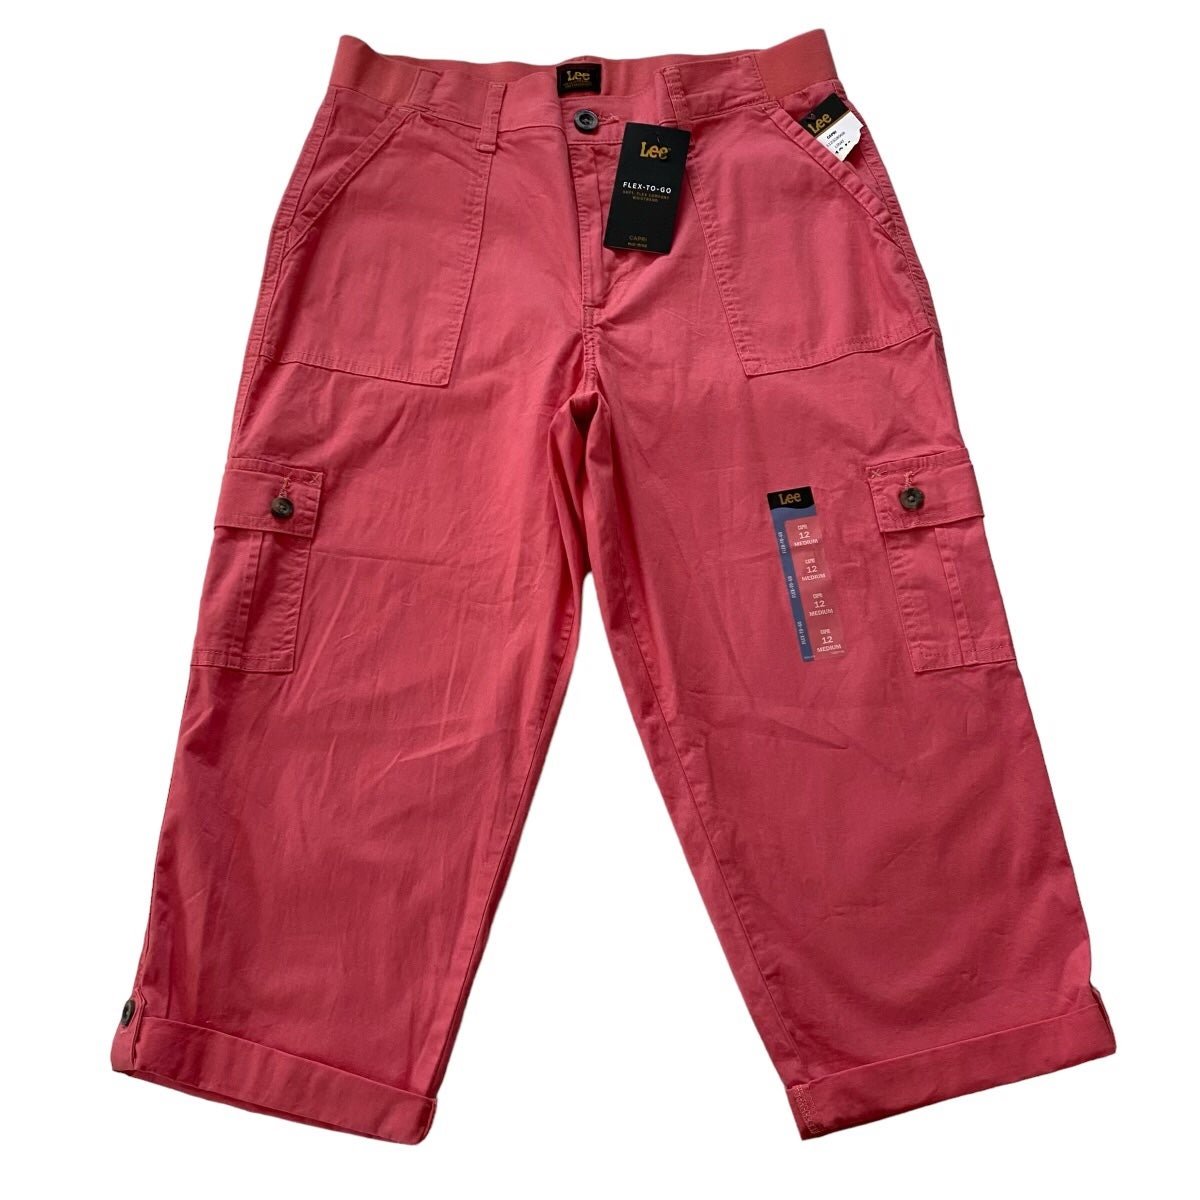 Stylish NWT Lee Women´s Flex-to-go Cargo Capri Pants Size 12 Medium Pink joaksBzd2 New Style